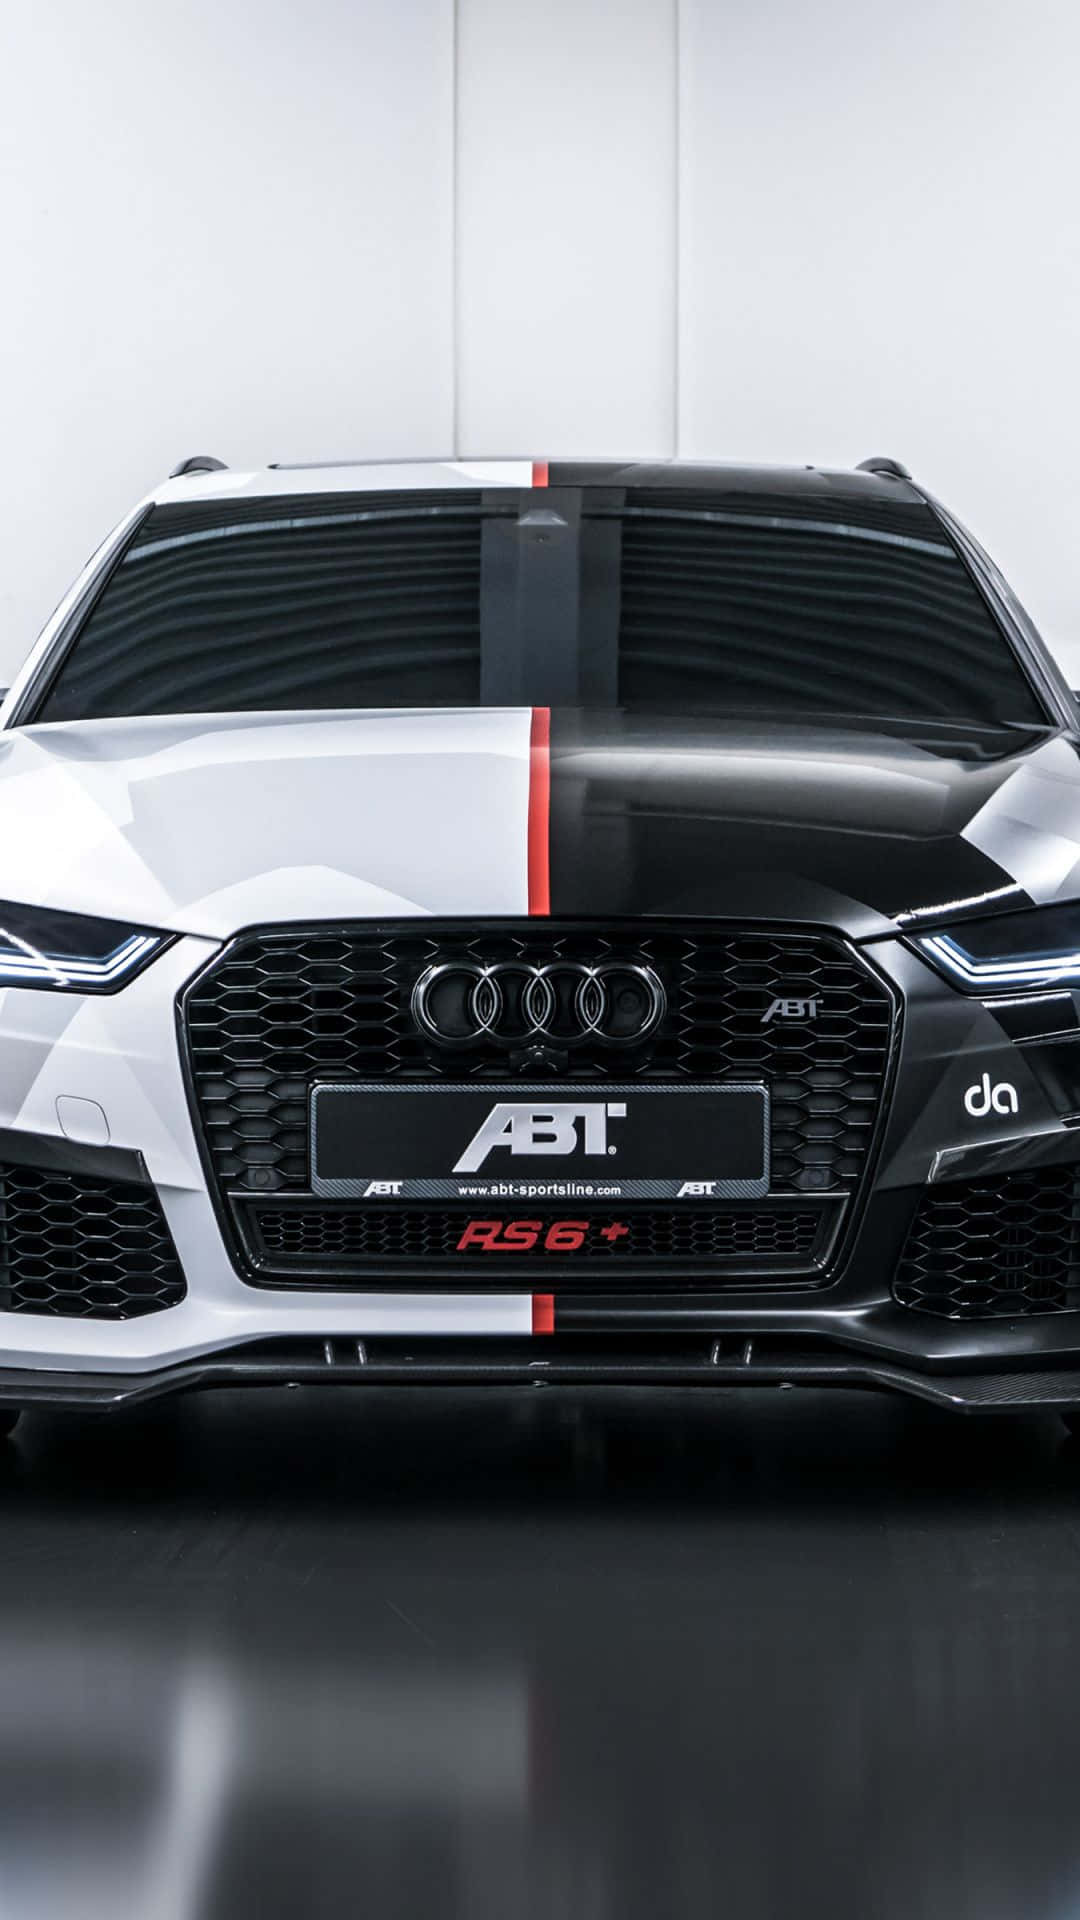 Sleek Audi RS6 in Motion Wallpaper